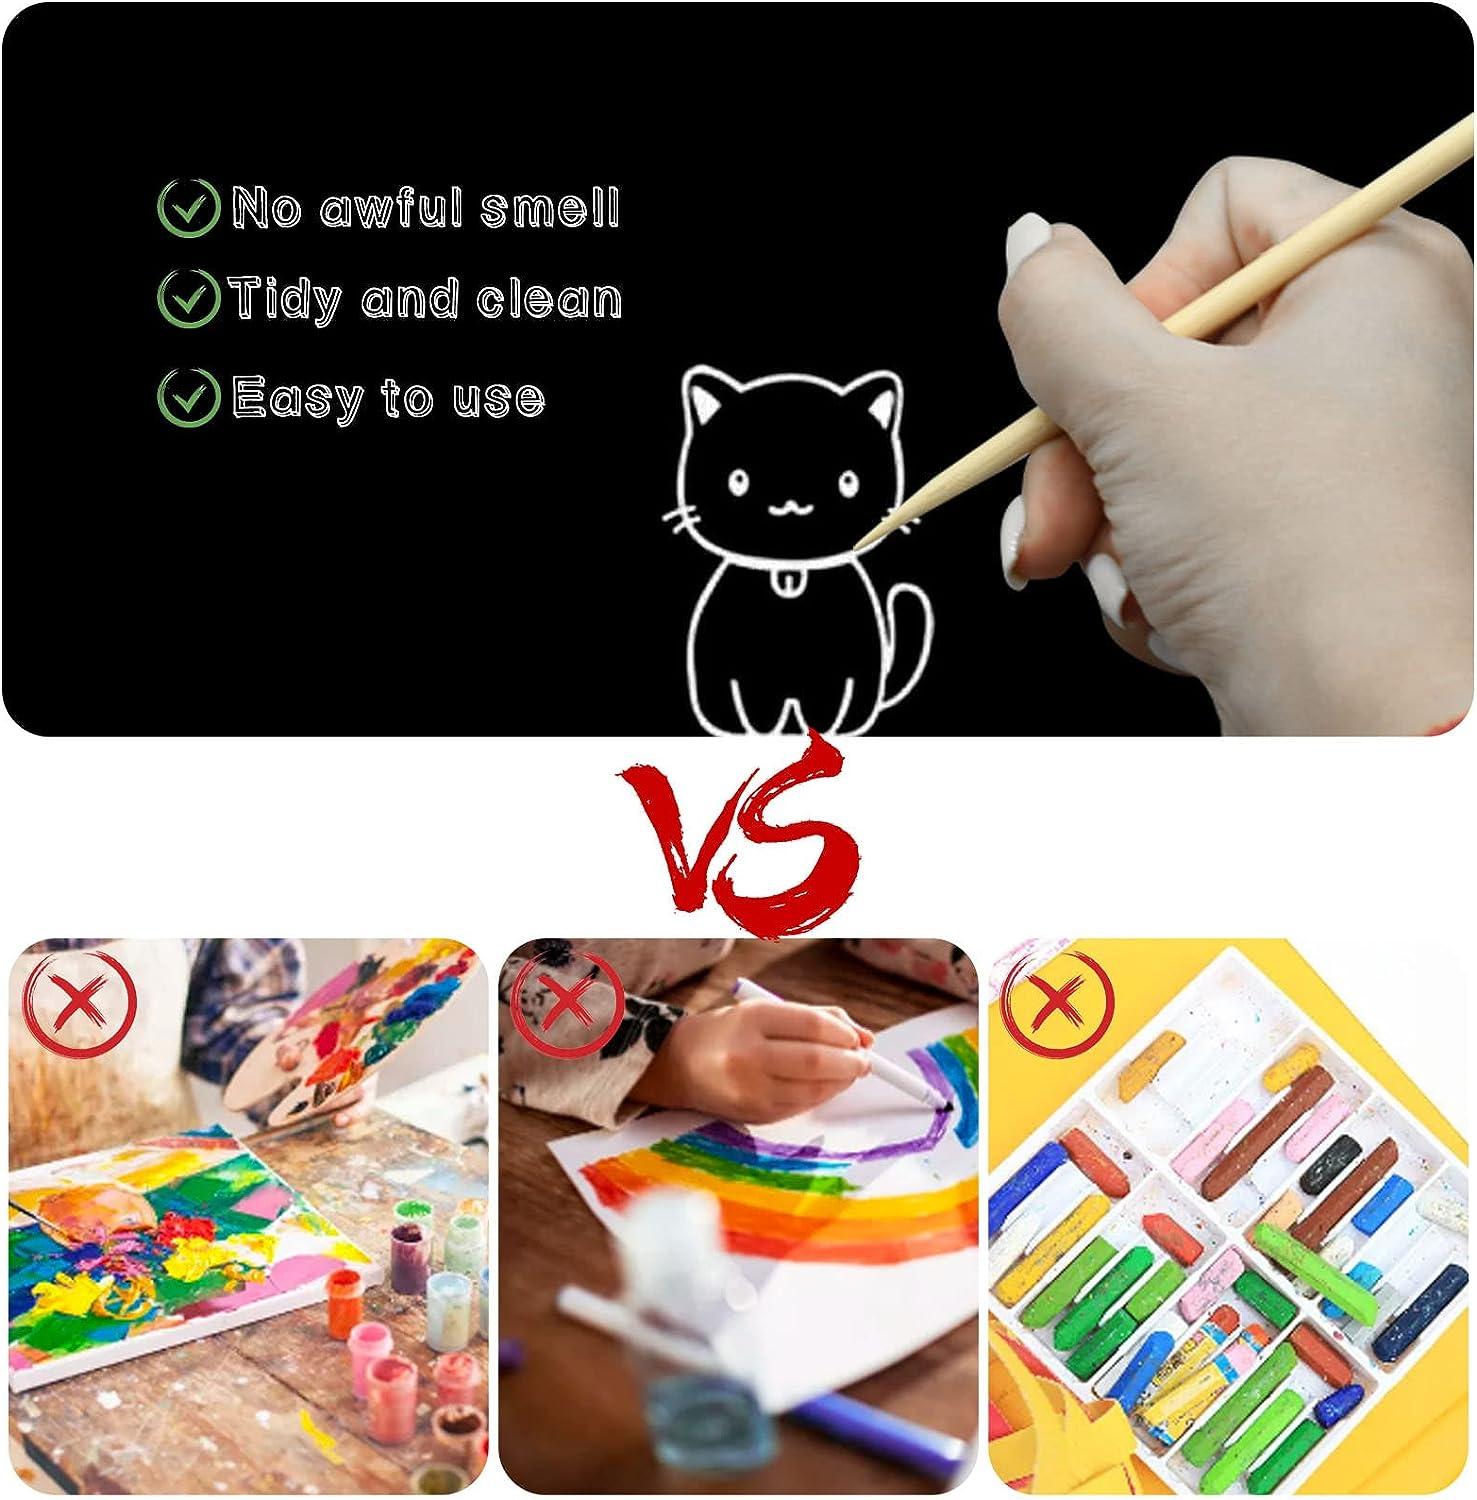 DIY Scratch Art the Easy Way  Scratch art, Easy art for kids